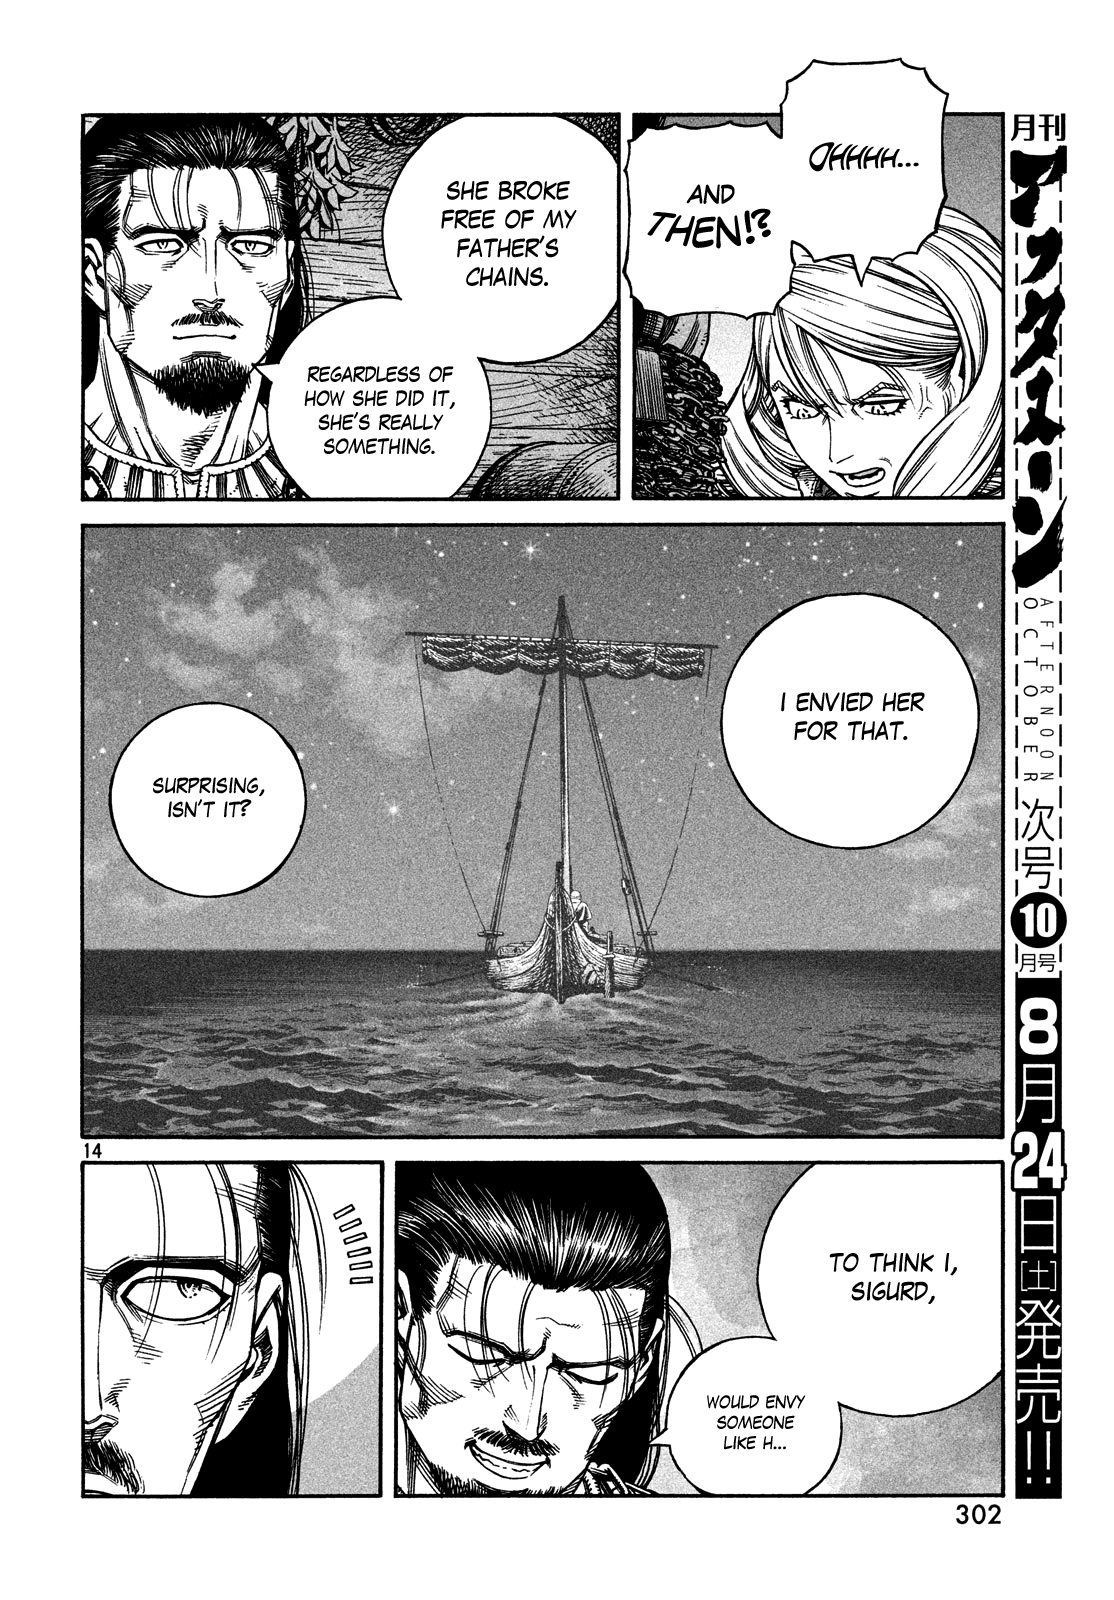 Vinland Saga Manga Manga Chapter - 163 - image 14